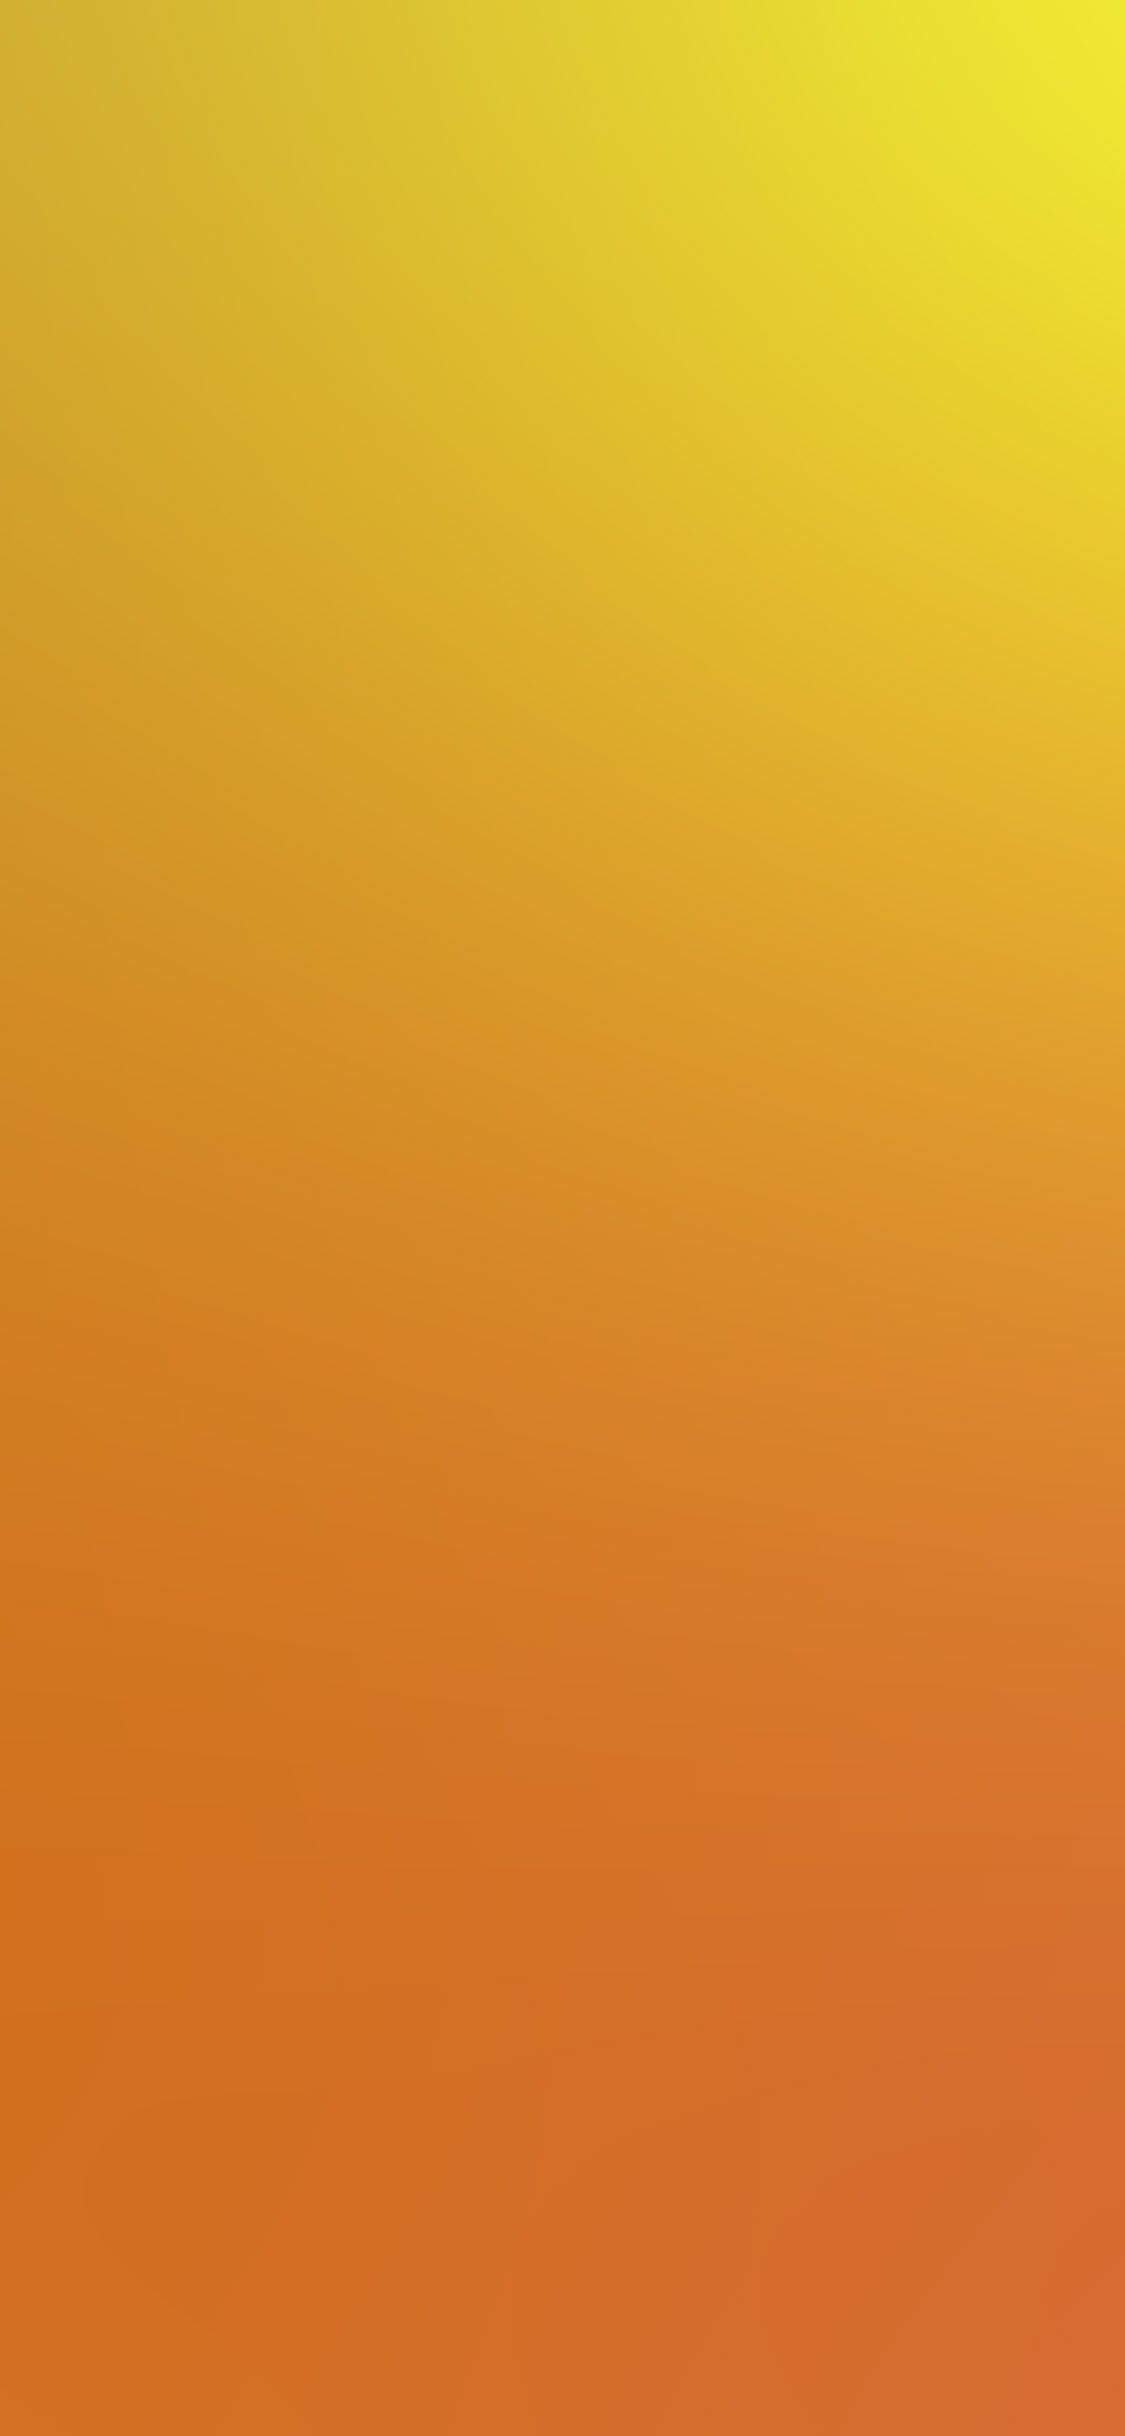 1125x2436 sm89-orange-yellow-blur-gradation via Wallpapers for iPhone X | Wallpaper laranja, Paletas de cores amarelas, Imagem laranja